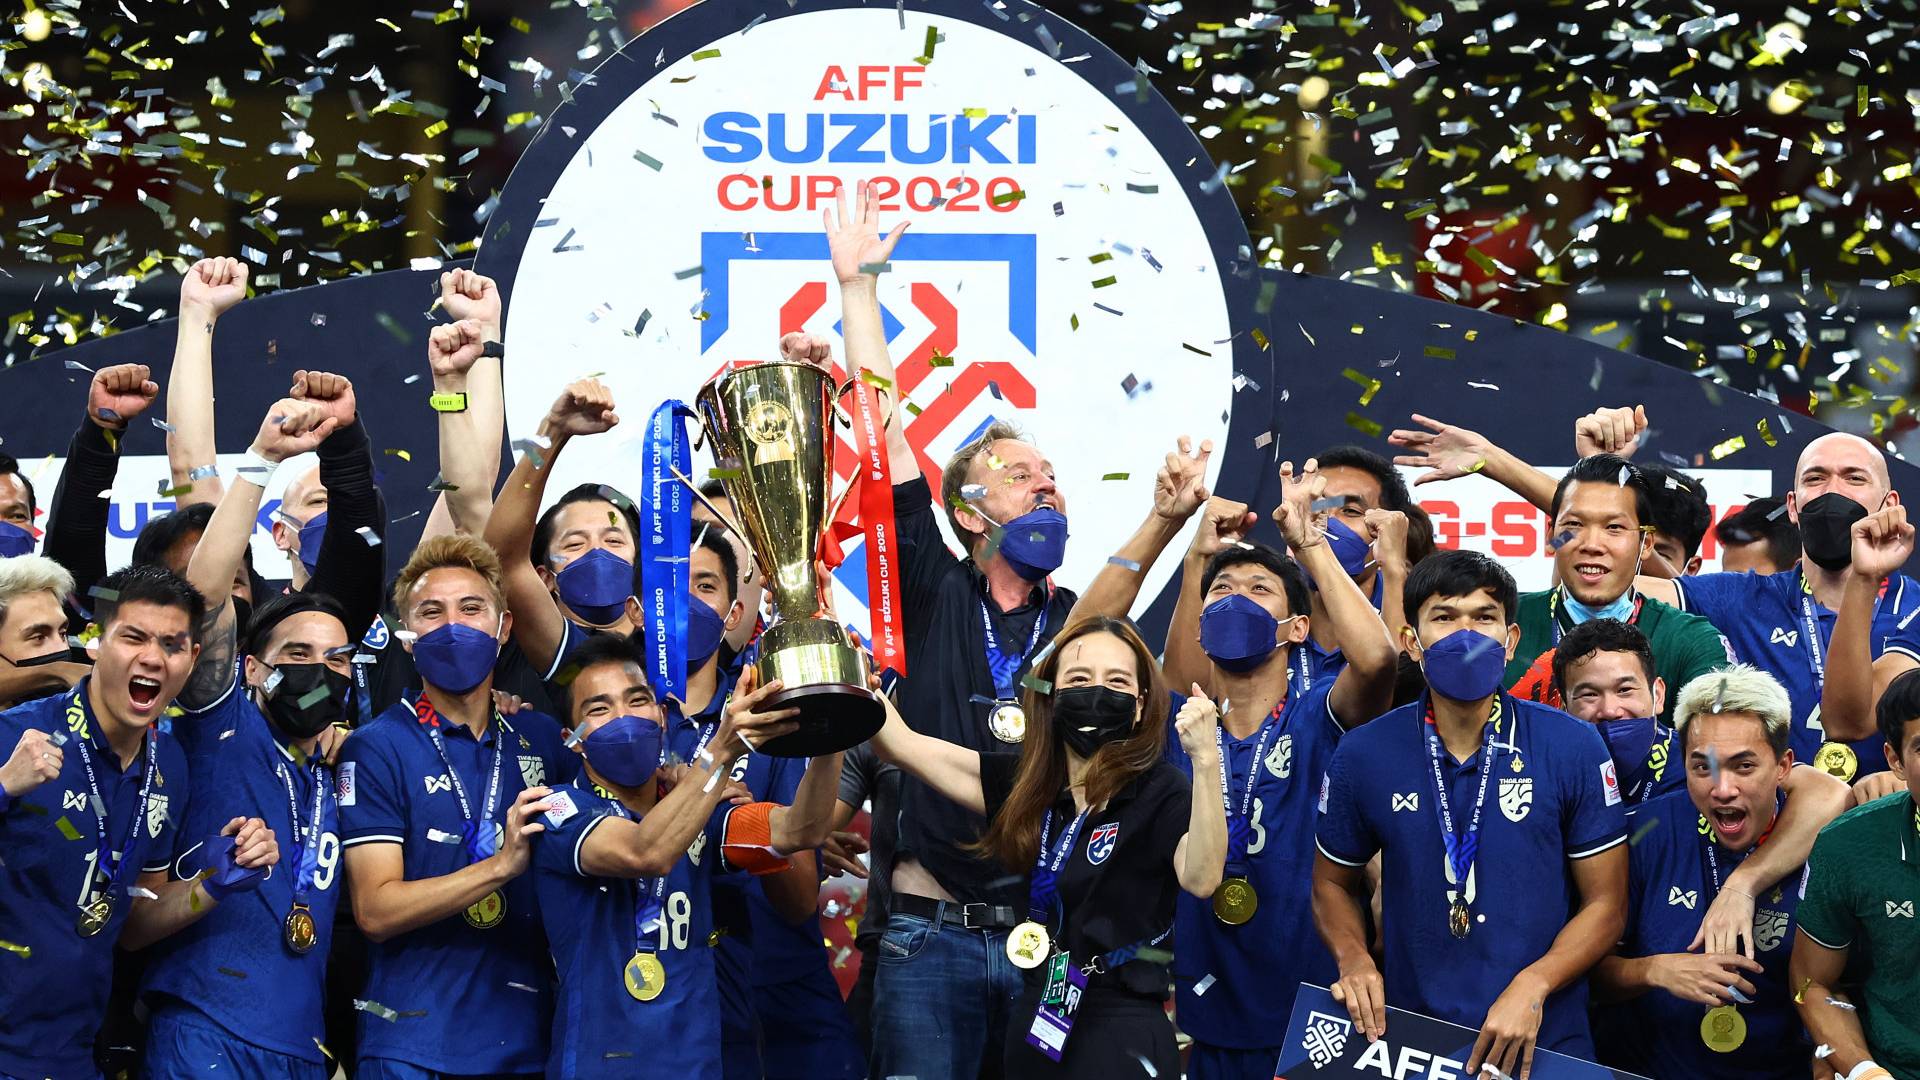 Piala Suzuki AFF Bakal Dikenali Dengan Nama Baru, Piala AFF Mitsubishi Electric